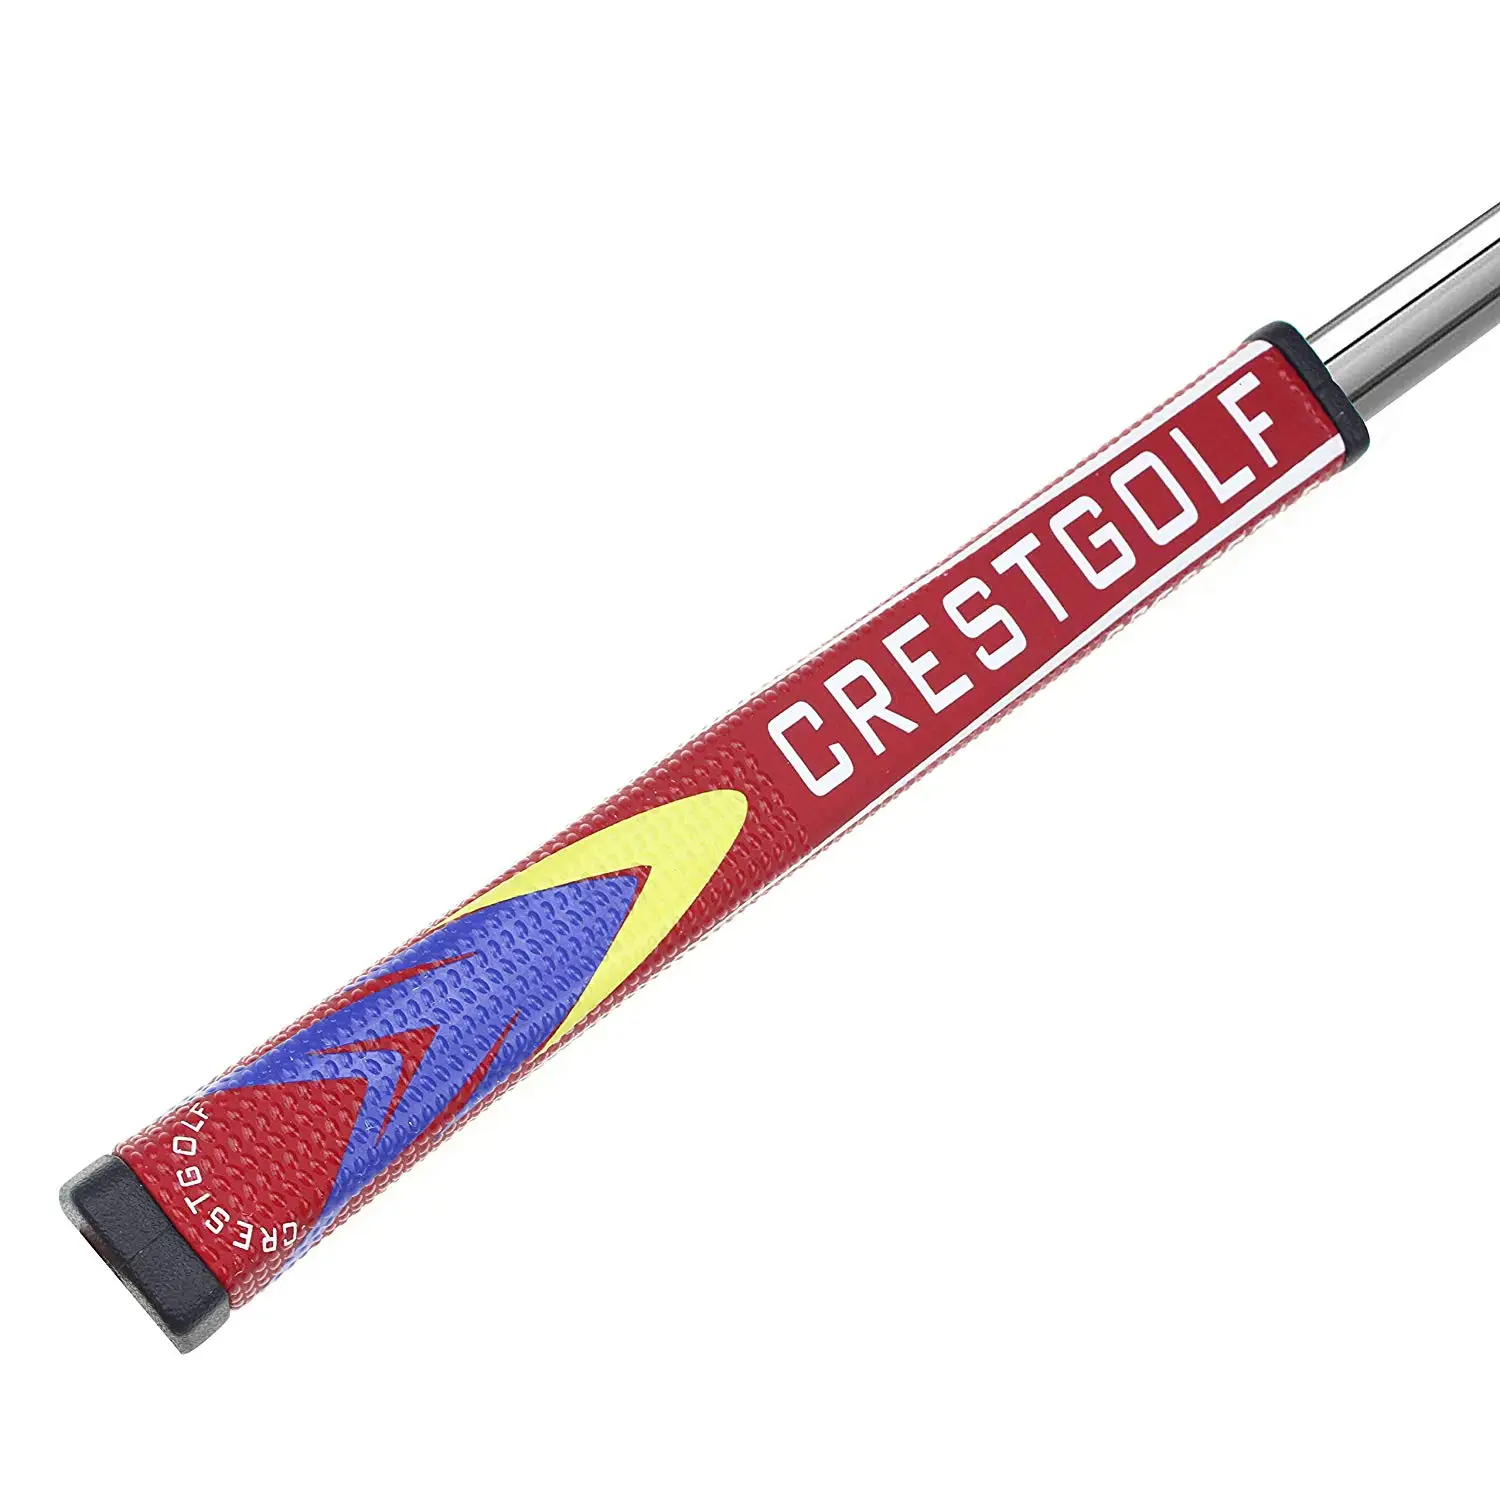 Crestgolf Putter Grips Midsize Anti-Slip Lightweight Golf Grip More Shock Absorption Strong Push for Golf Grips Black/Red